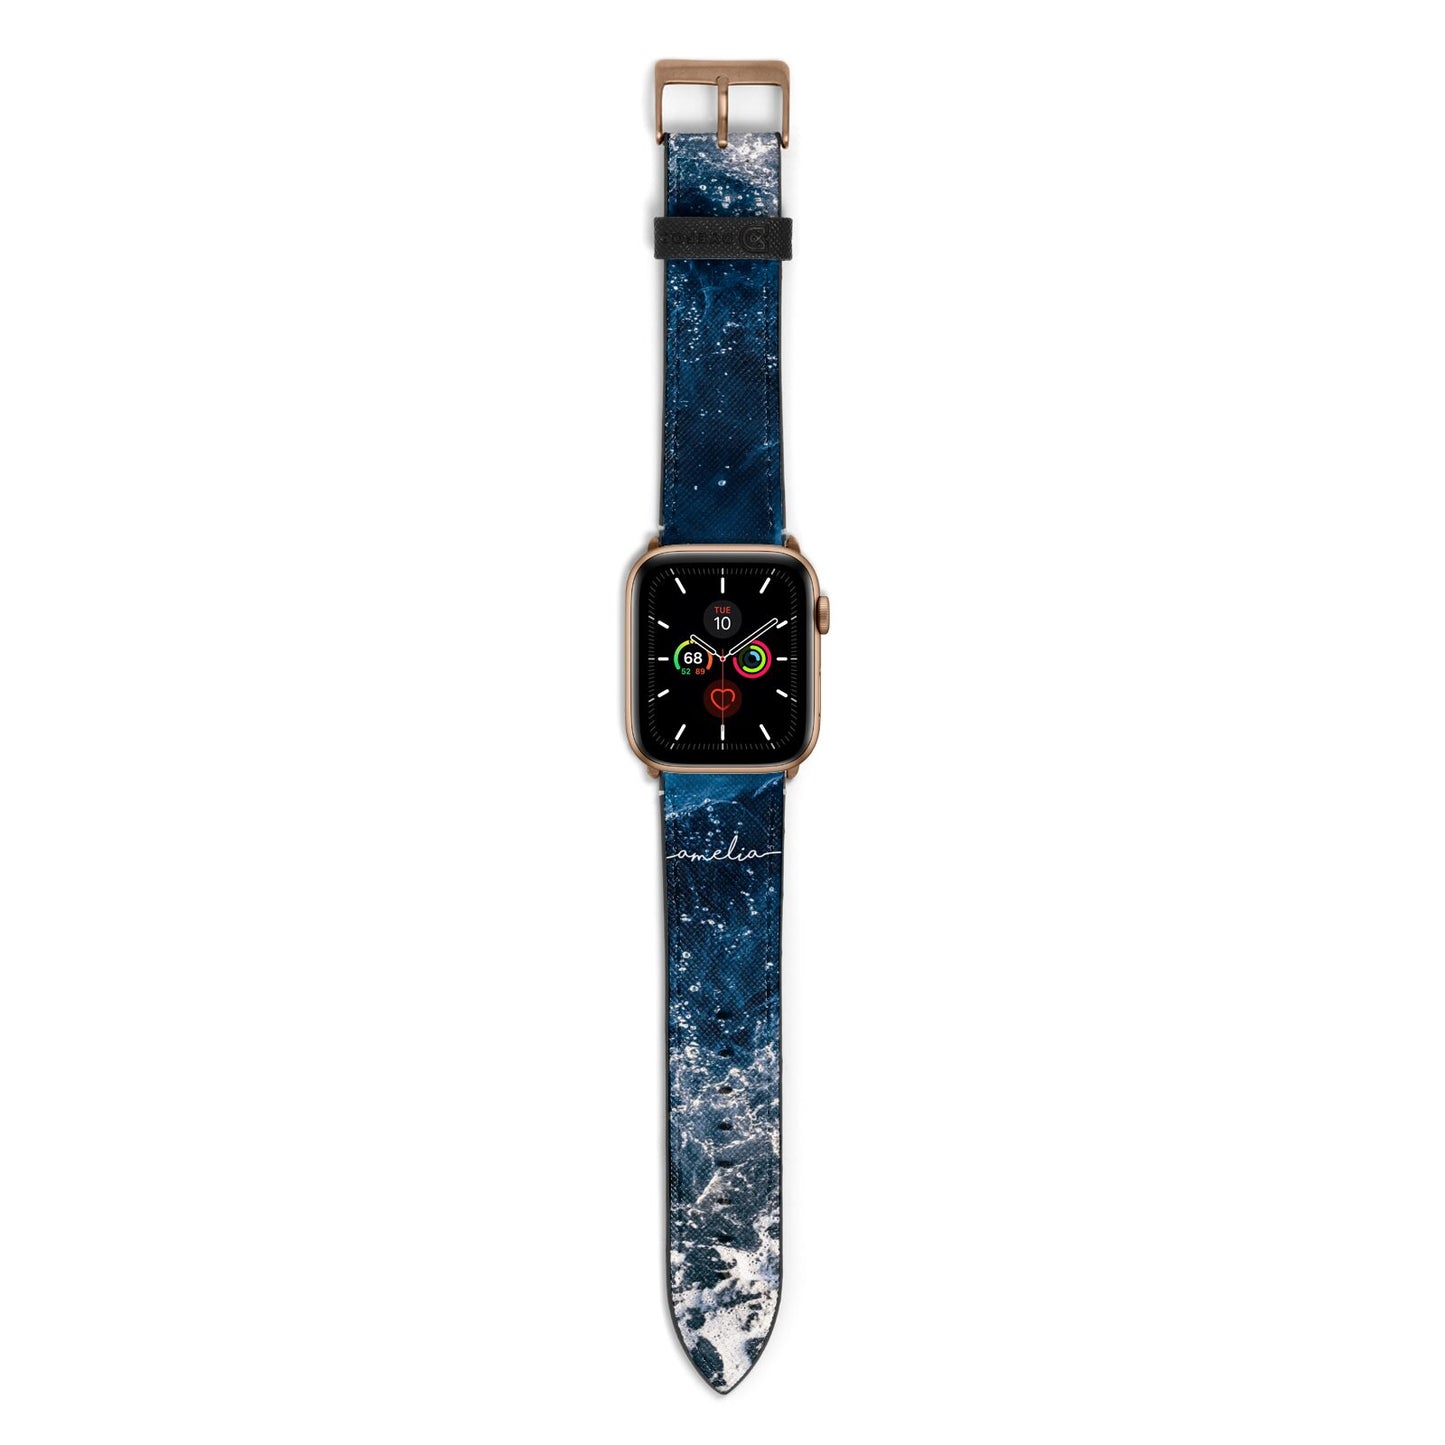 Custom Sea Apple Watch Strap with Gold Hardware